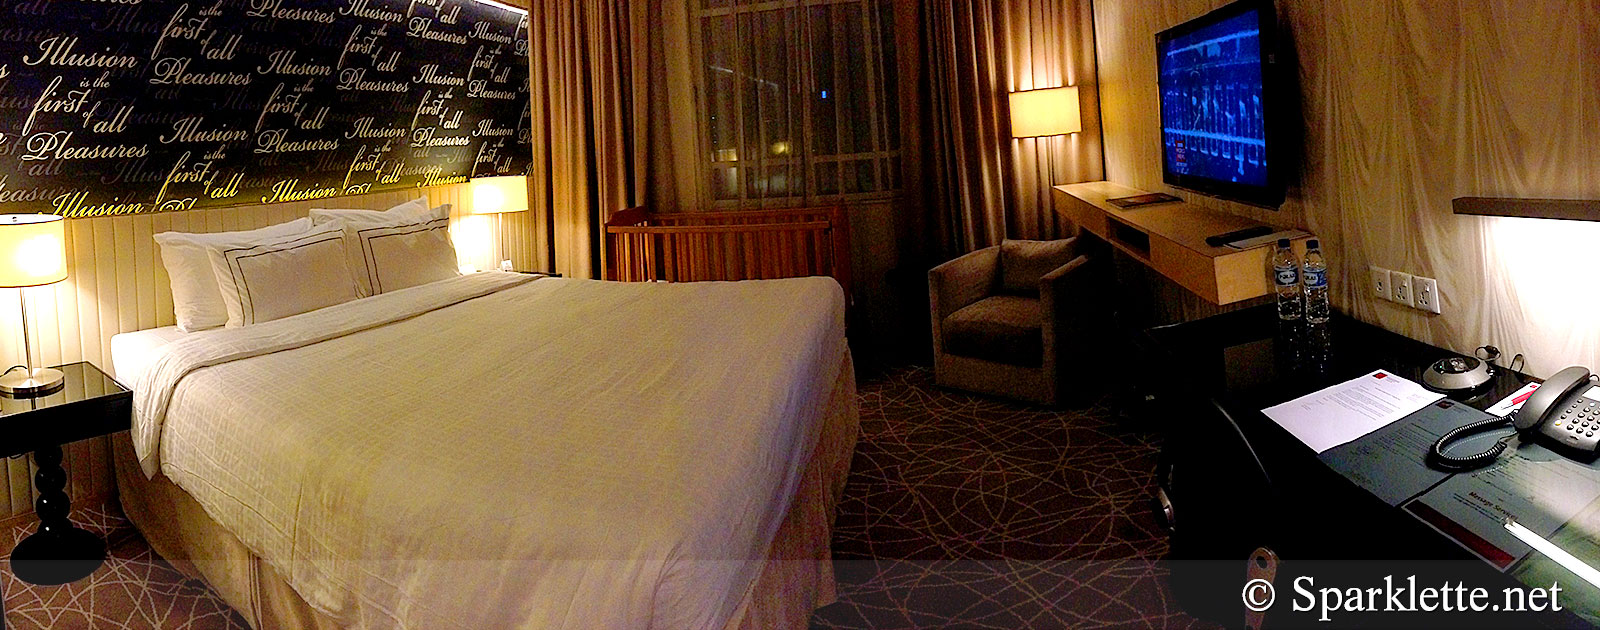 Rendezvous Hotel Singapore Club Room